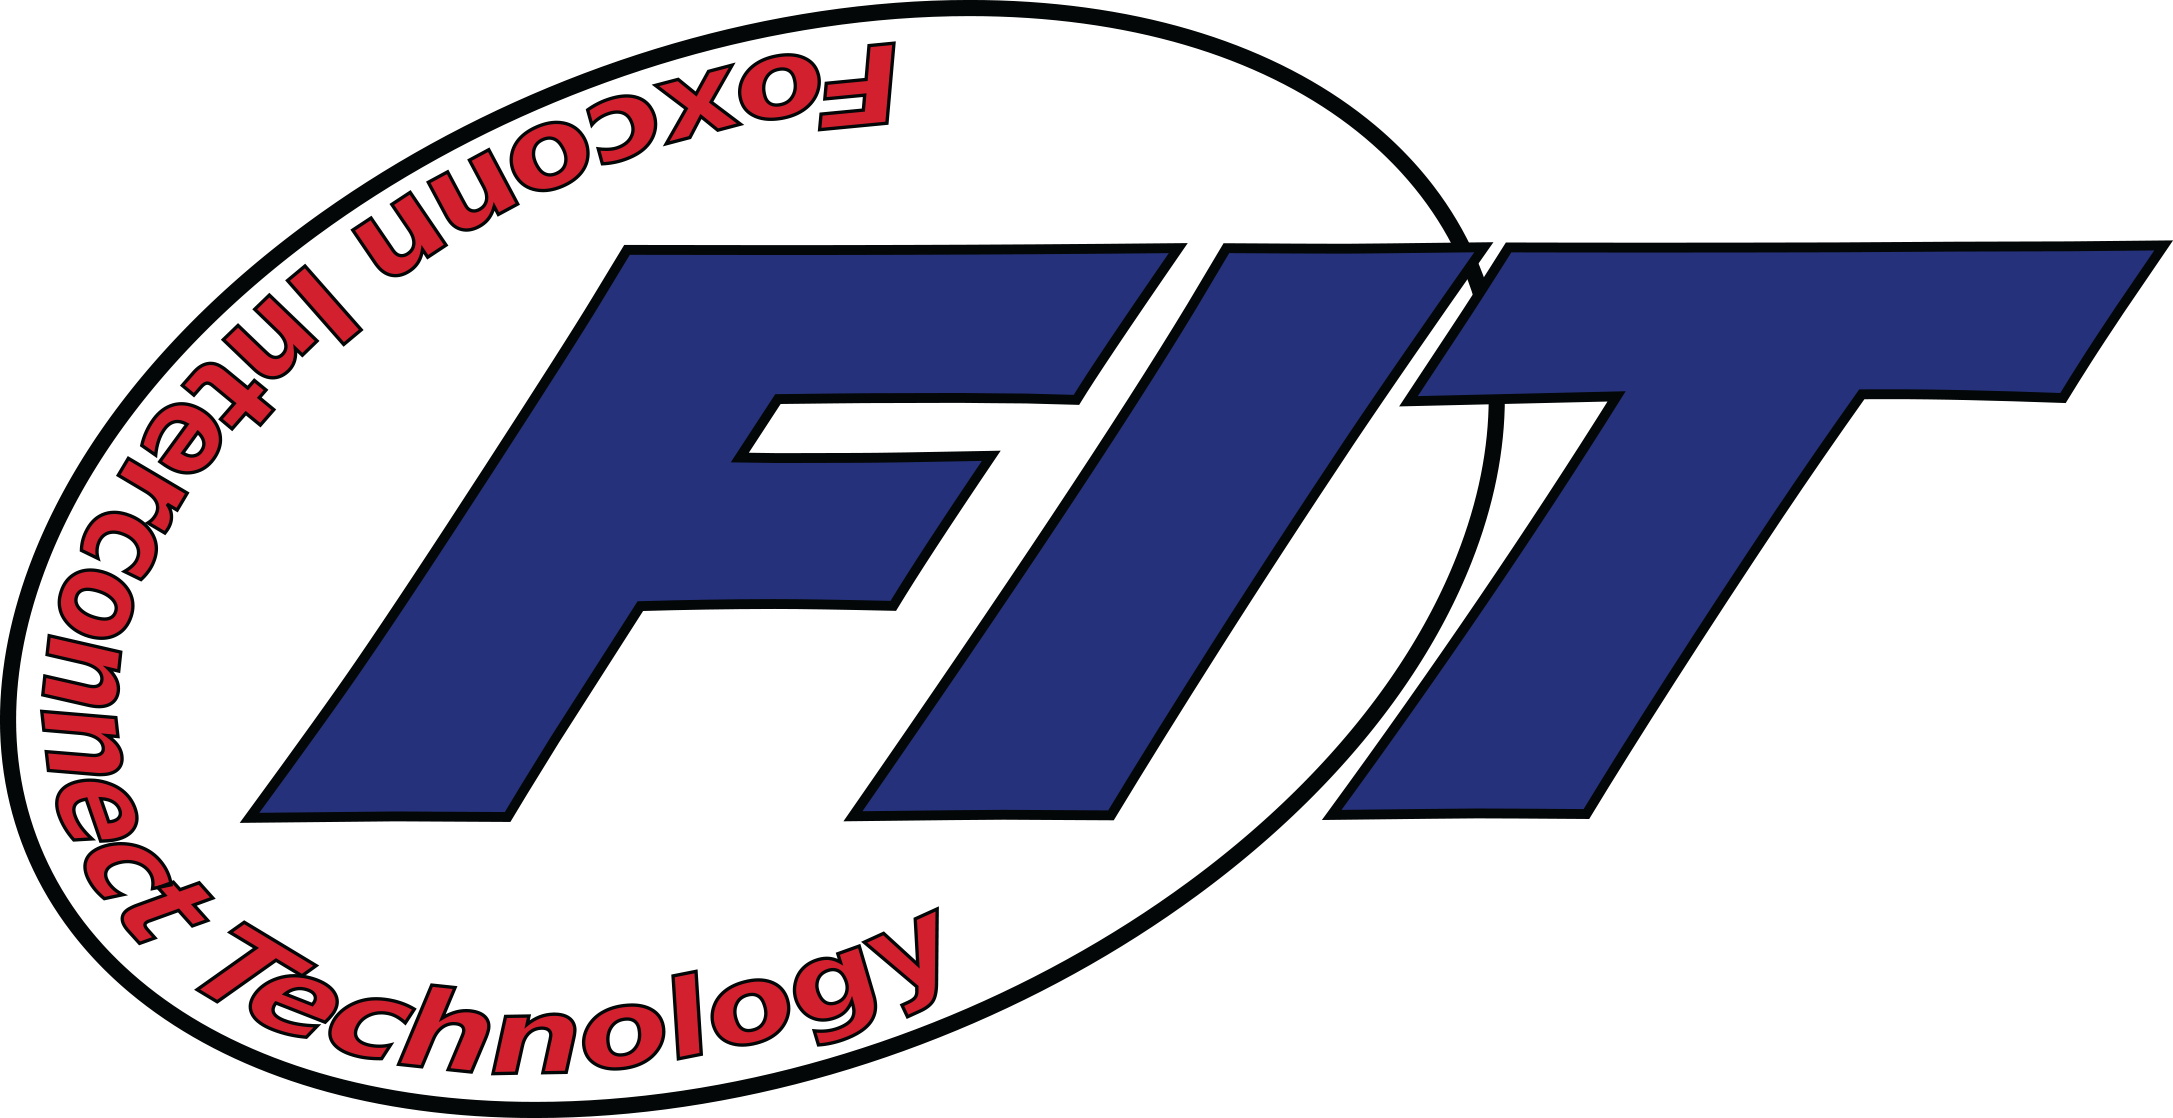 Foxconn OE Technologies Singapore Pte. LTD